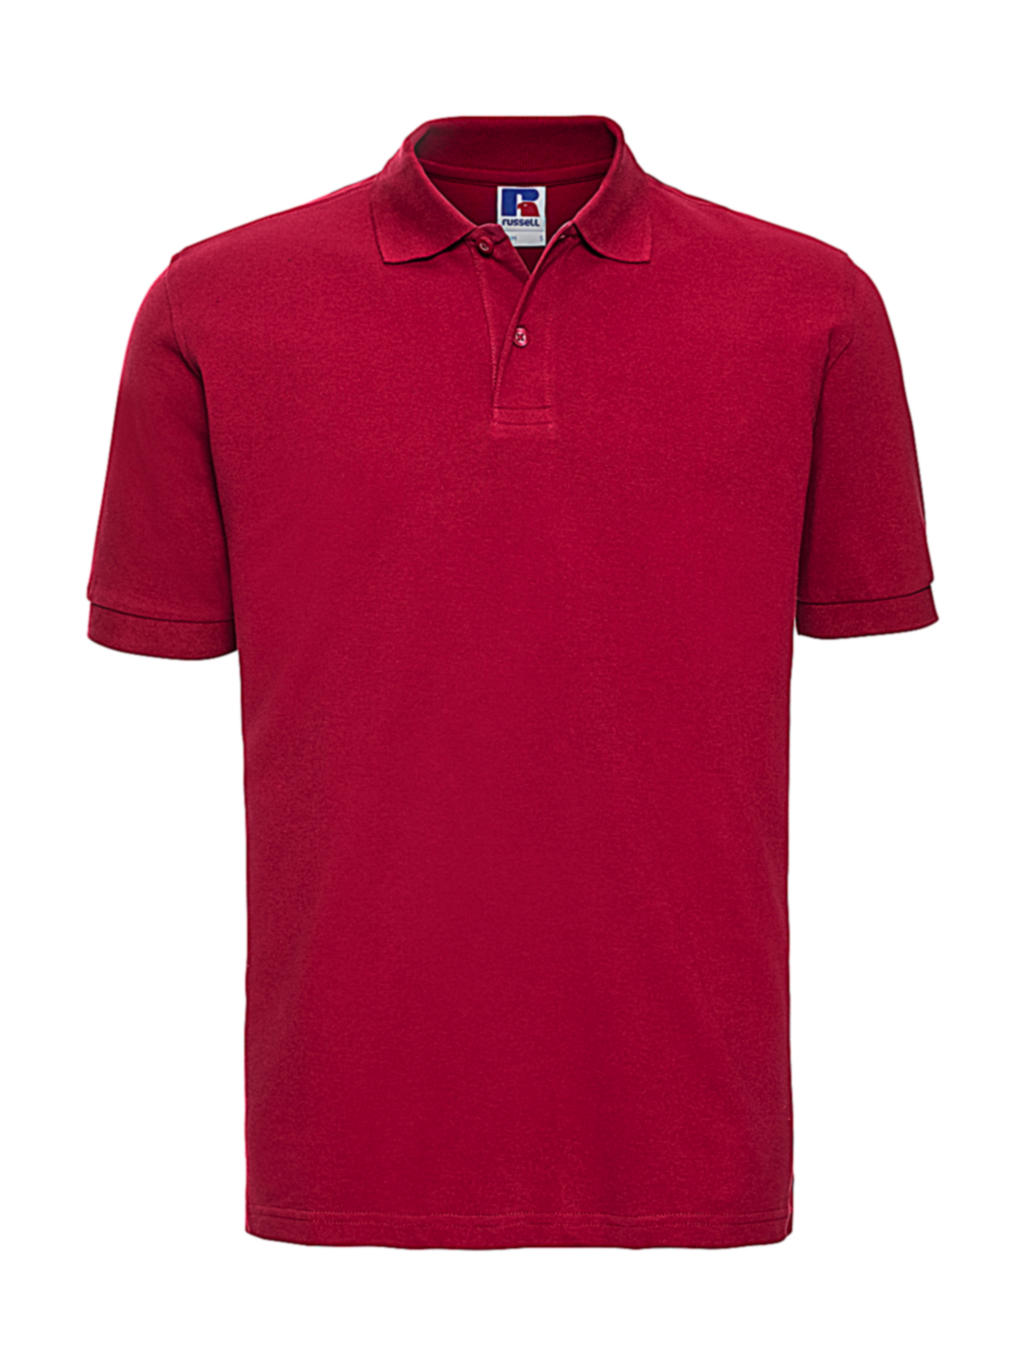  Mens Classic Cotton Polo in Farbe Classic Red